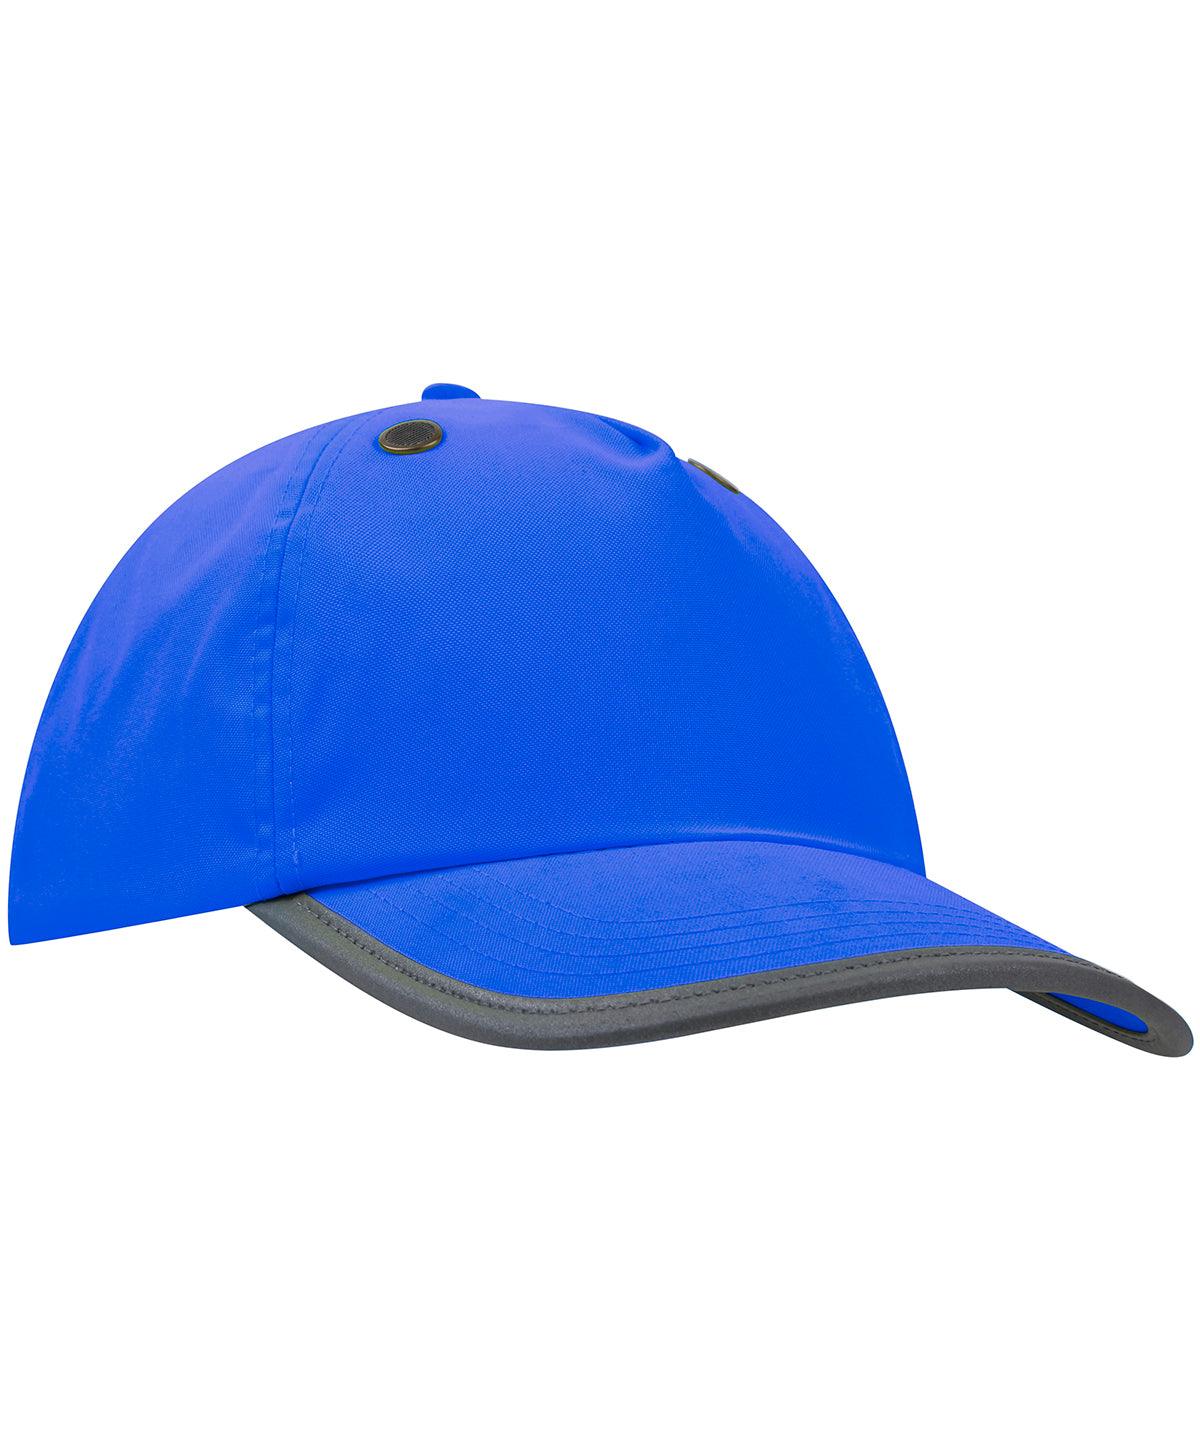 Royal - Safety bump cap (TFC100) Caps Yoko Headwear, PPE, Rebrandable, Safetywear, Workwear Schoolwear Centres